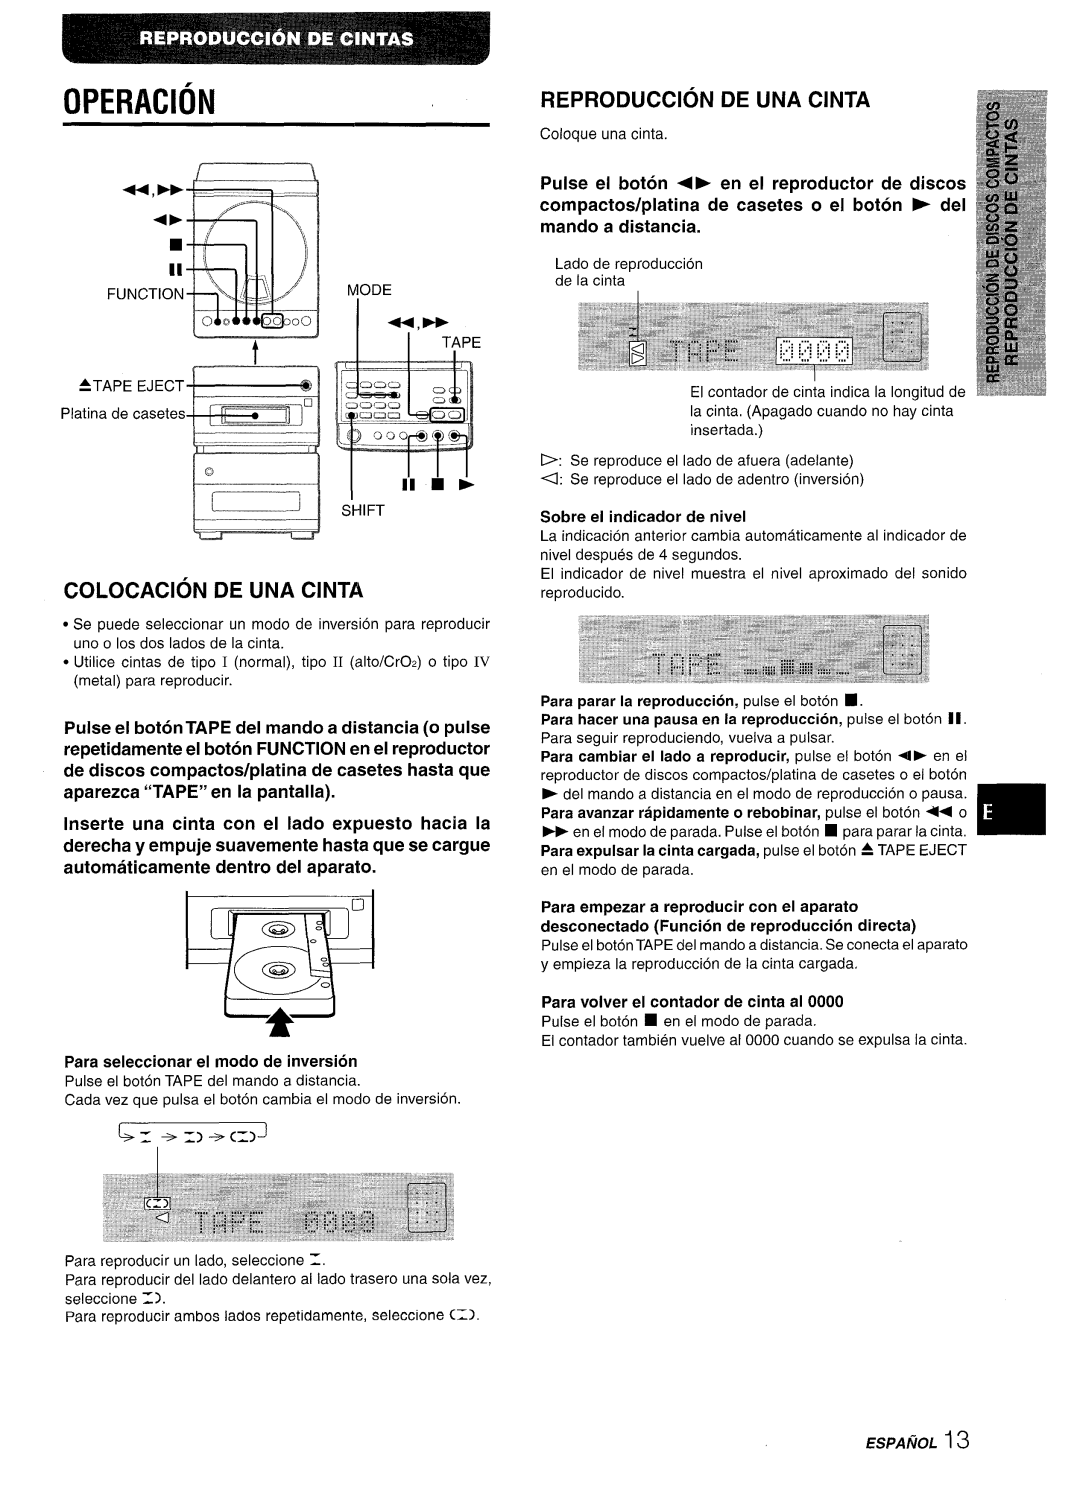 Aiwa XR-M88 manual COLOCACION DE UNA ClNT/i, Reproduction De Una Cinta, automaticamente dentro del aparato, Operacion 